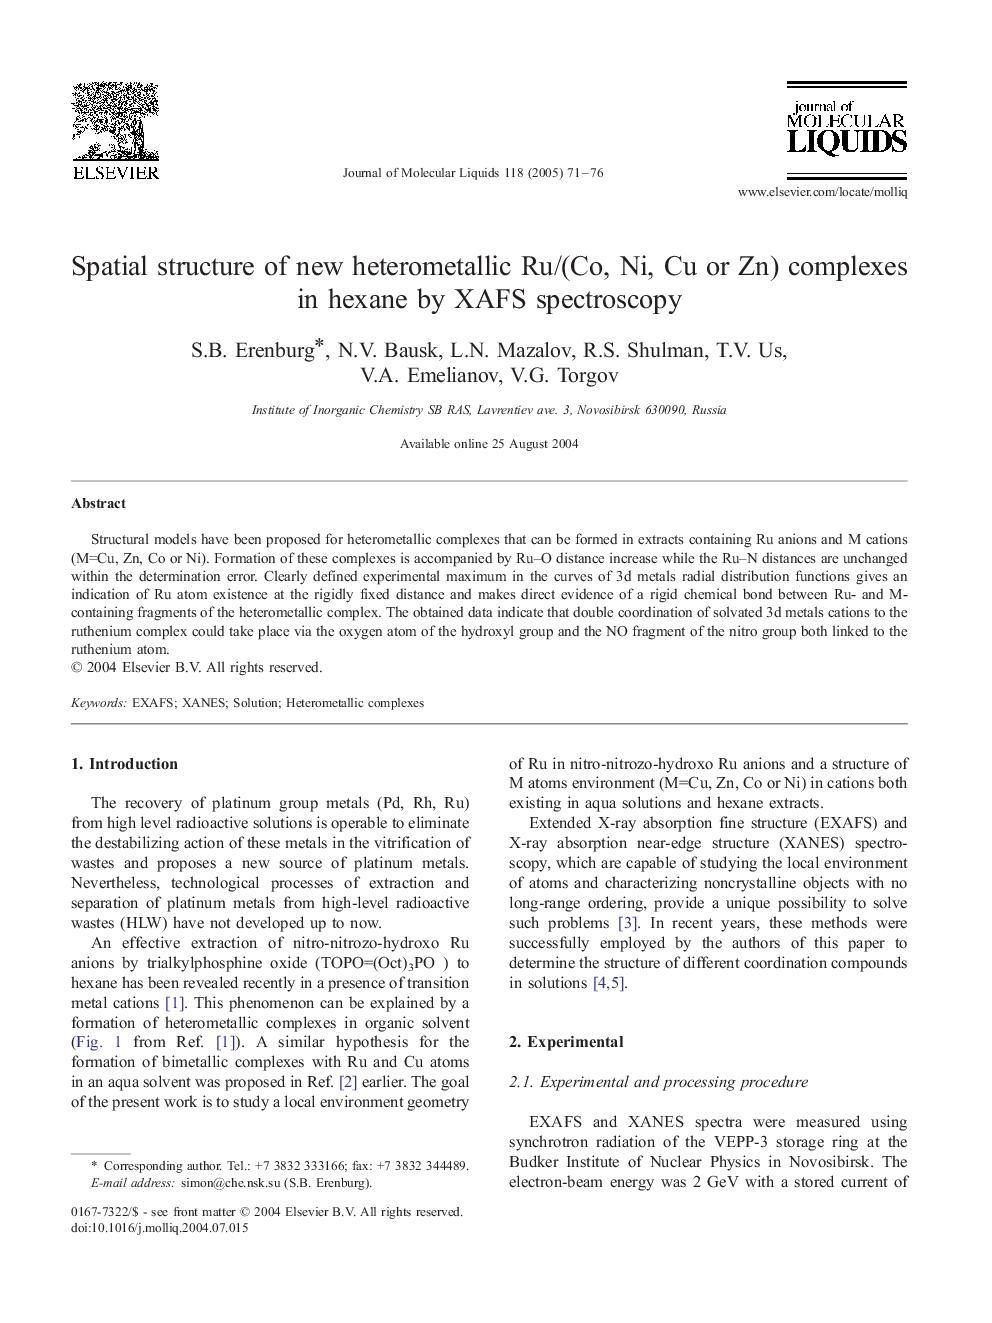 Spatial structure of new heterometallic Ru/(Co, Ni, Cu or Zn) complexes in hexane by XAFS spectroscopy